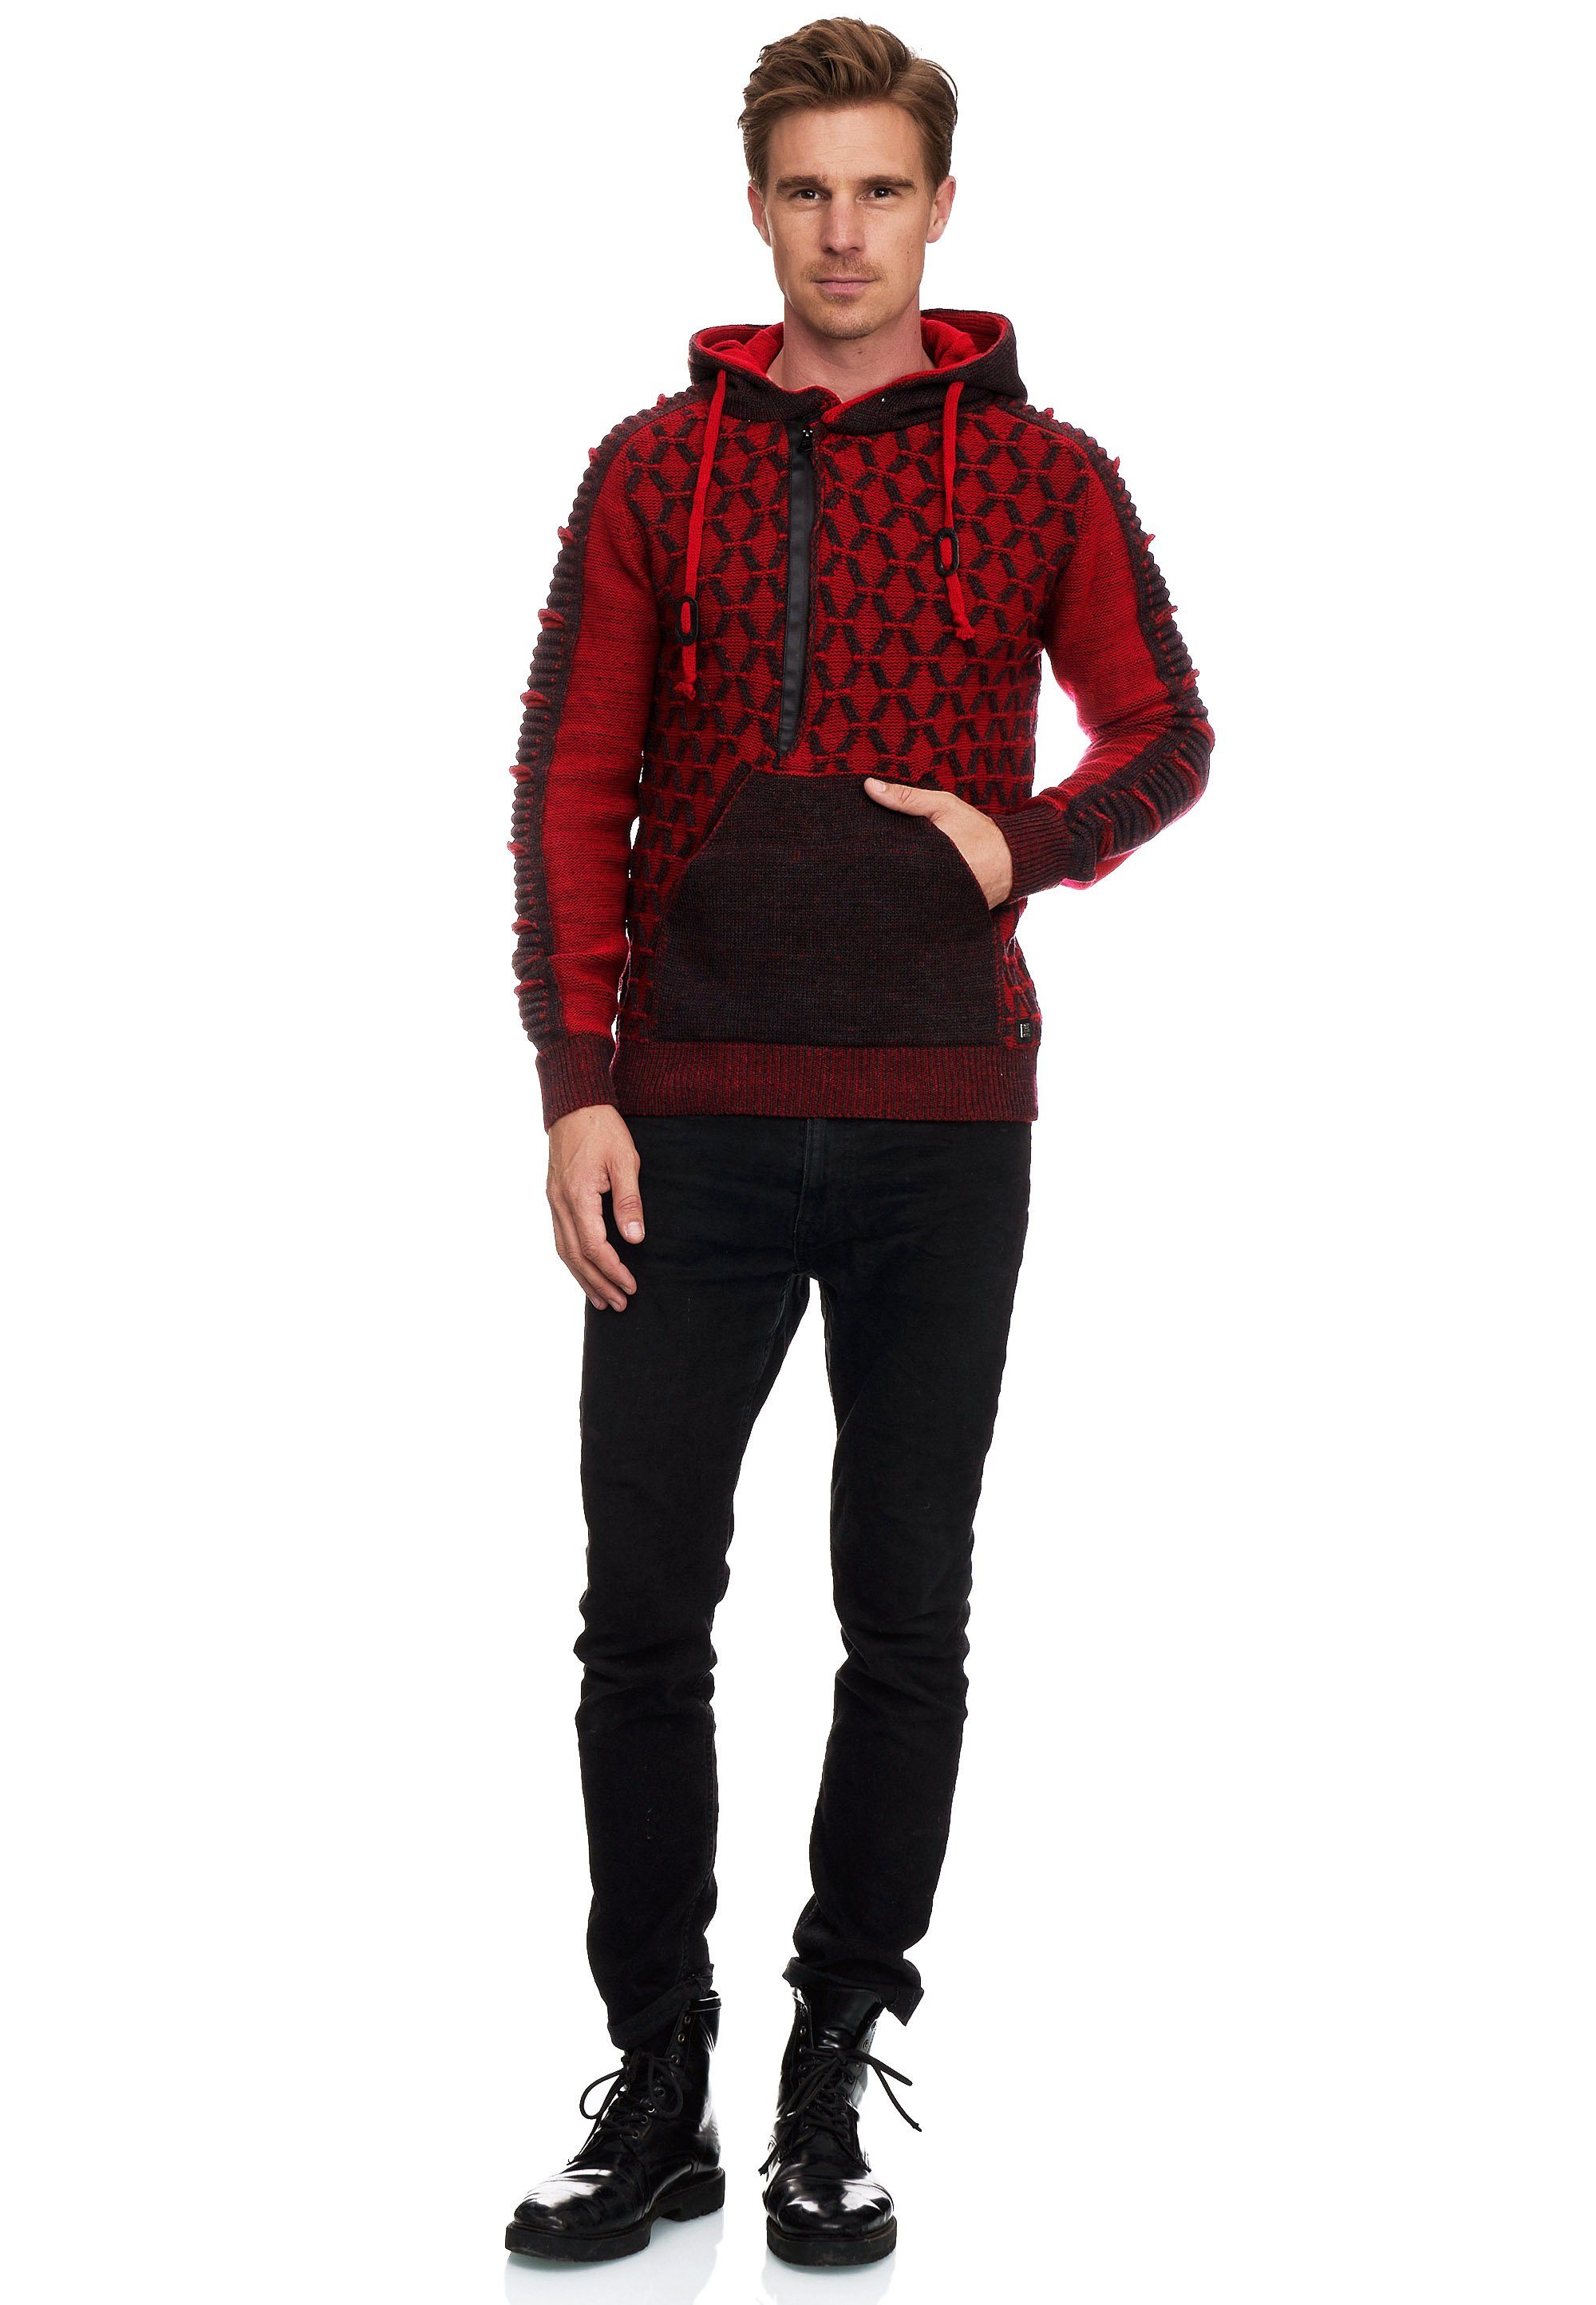 Rusty Neal Kapuzensweatshirt in ausgefallenem Design rot-anthrazit